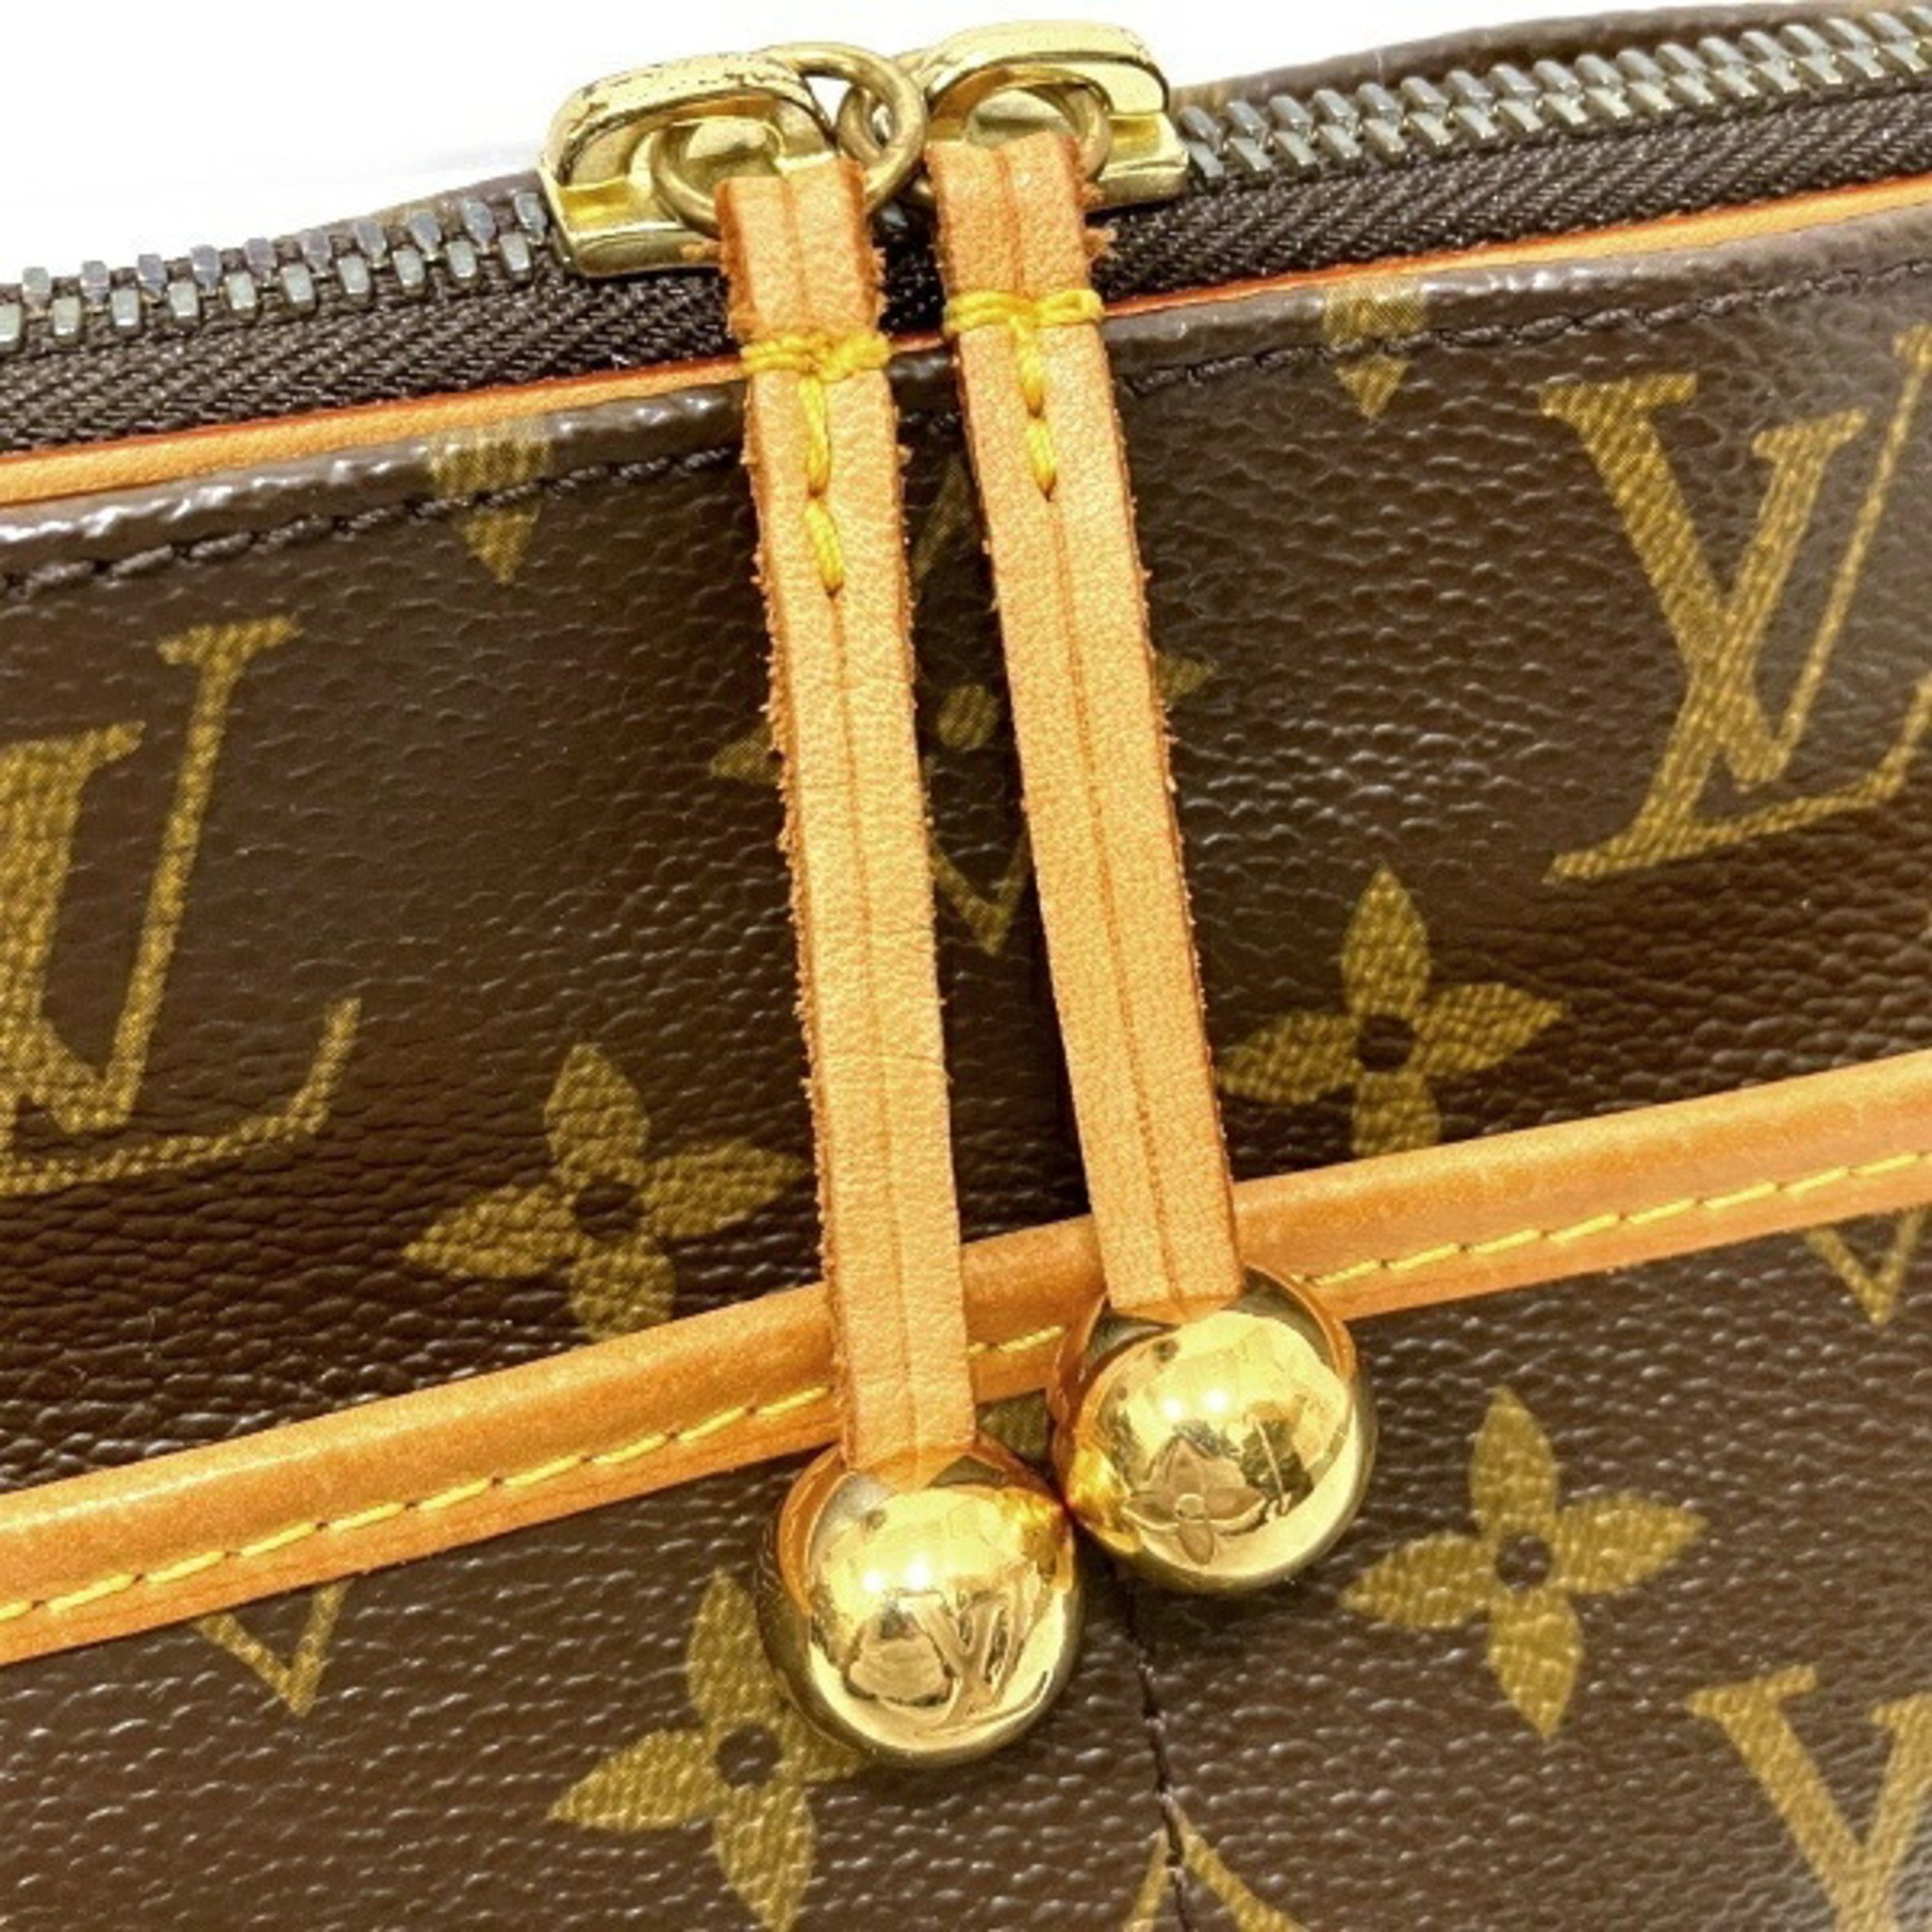 Louis Vuitton Monogram Popin Coeuron M40008 Bag Shoulder Ladies